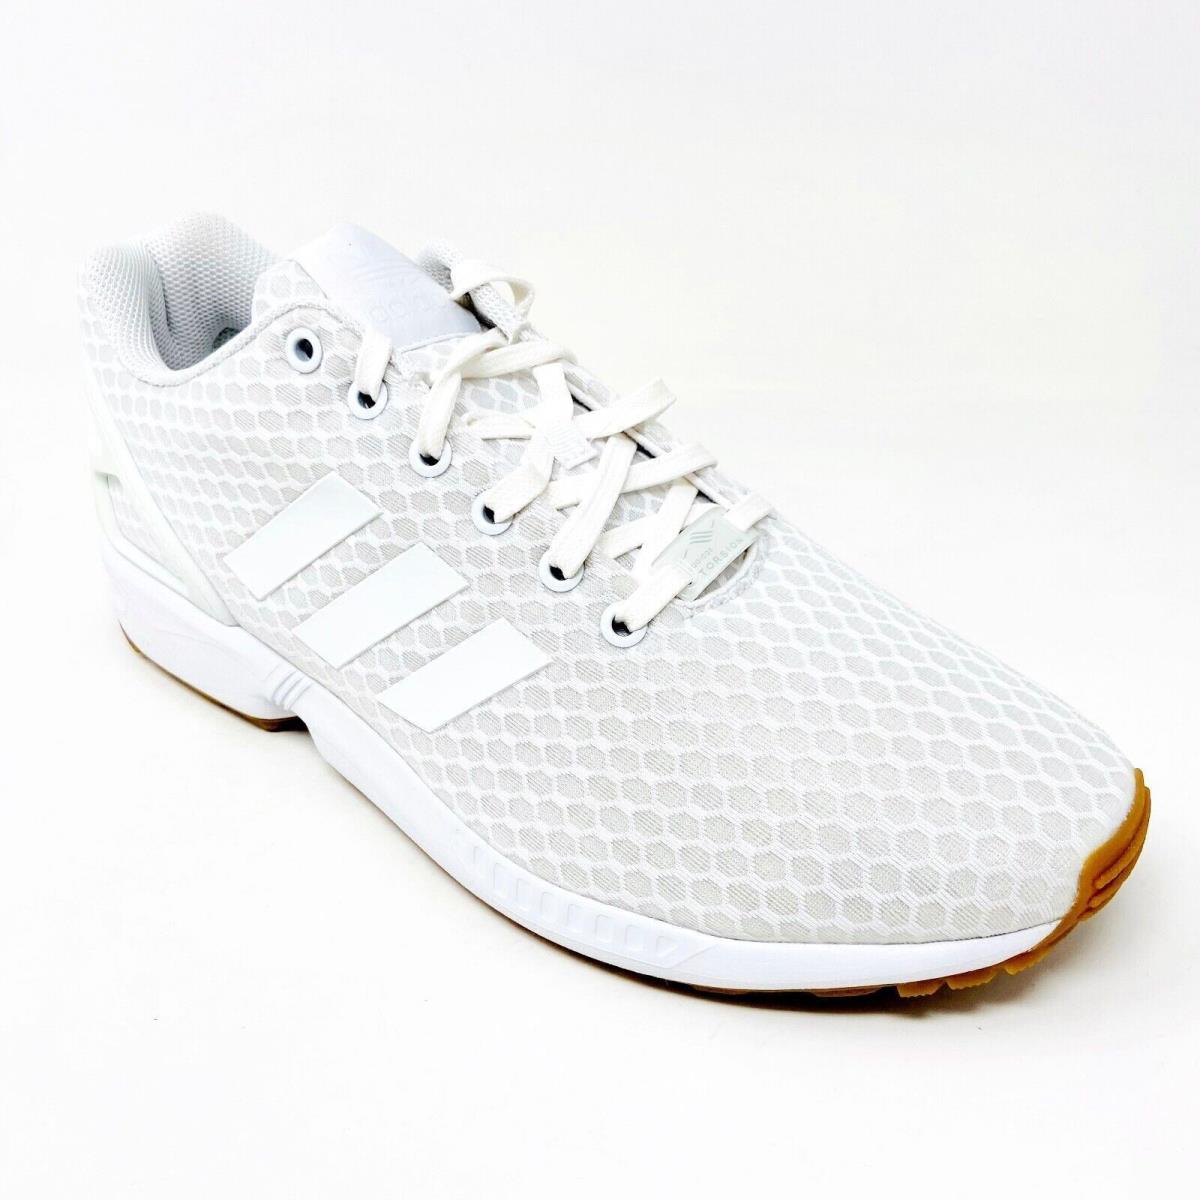 Adidas Originals ZX Flux Torsion White Gum Mens Running Shoes S79931 | 692740406107 - Adidas shoes - White